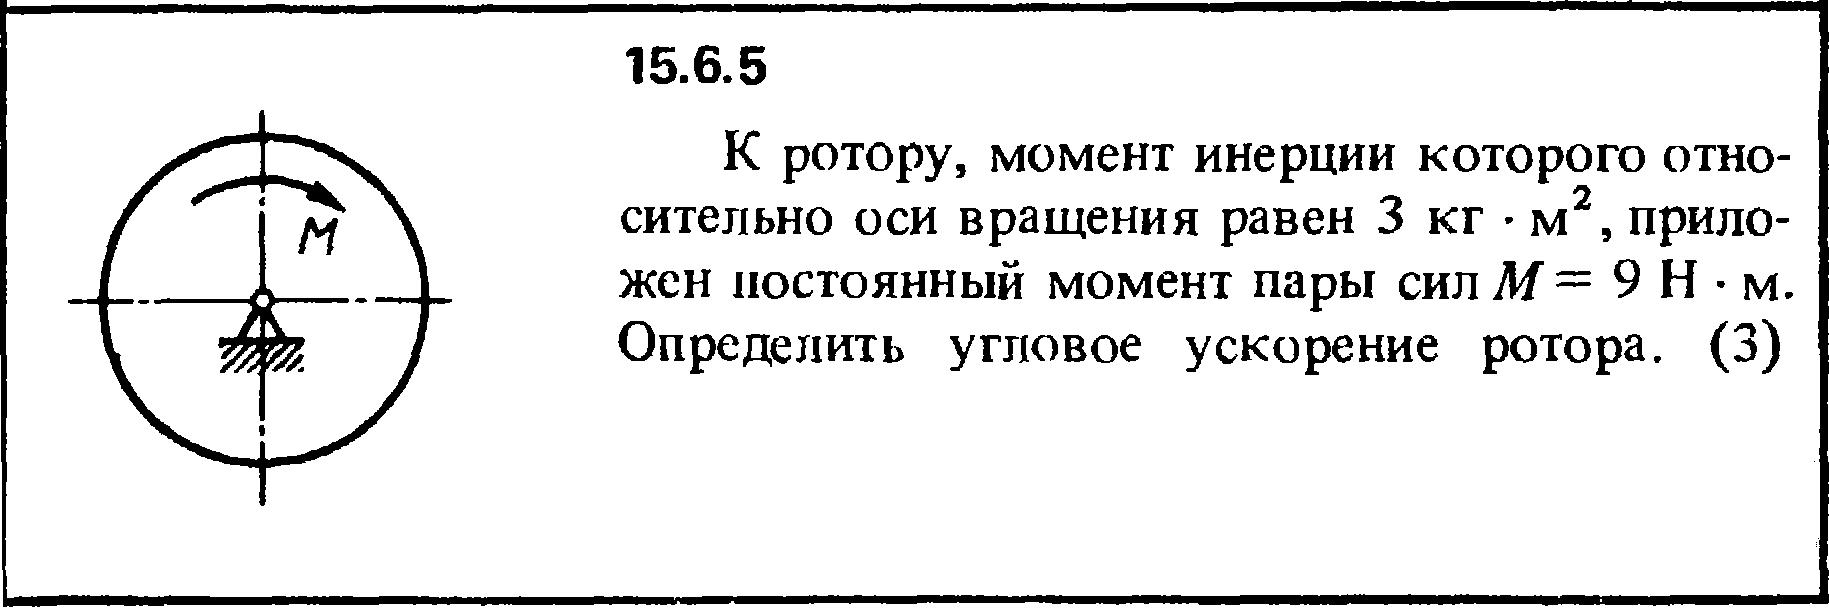 Решение задачи 15.6.5 из сборника Кепе О.Е. 1989 года